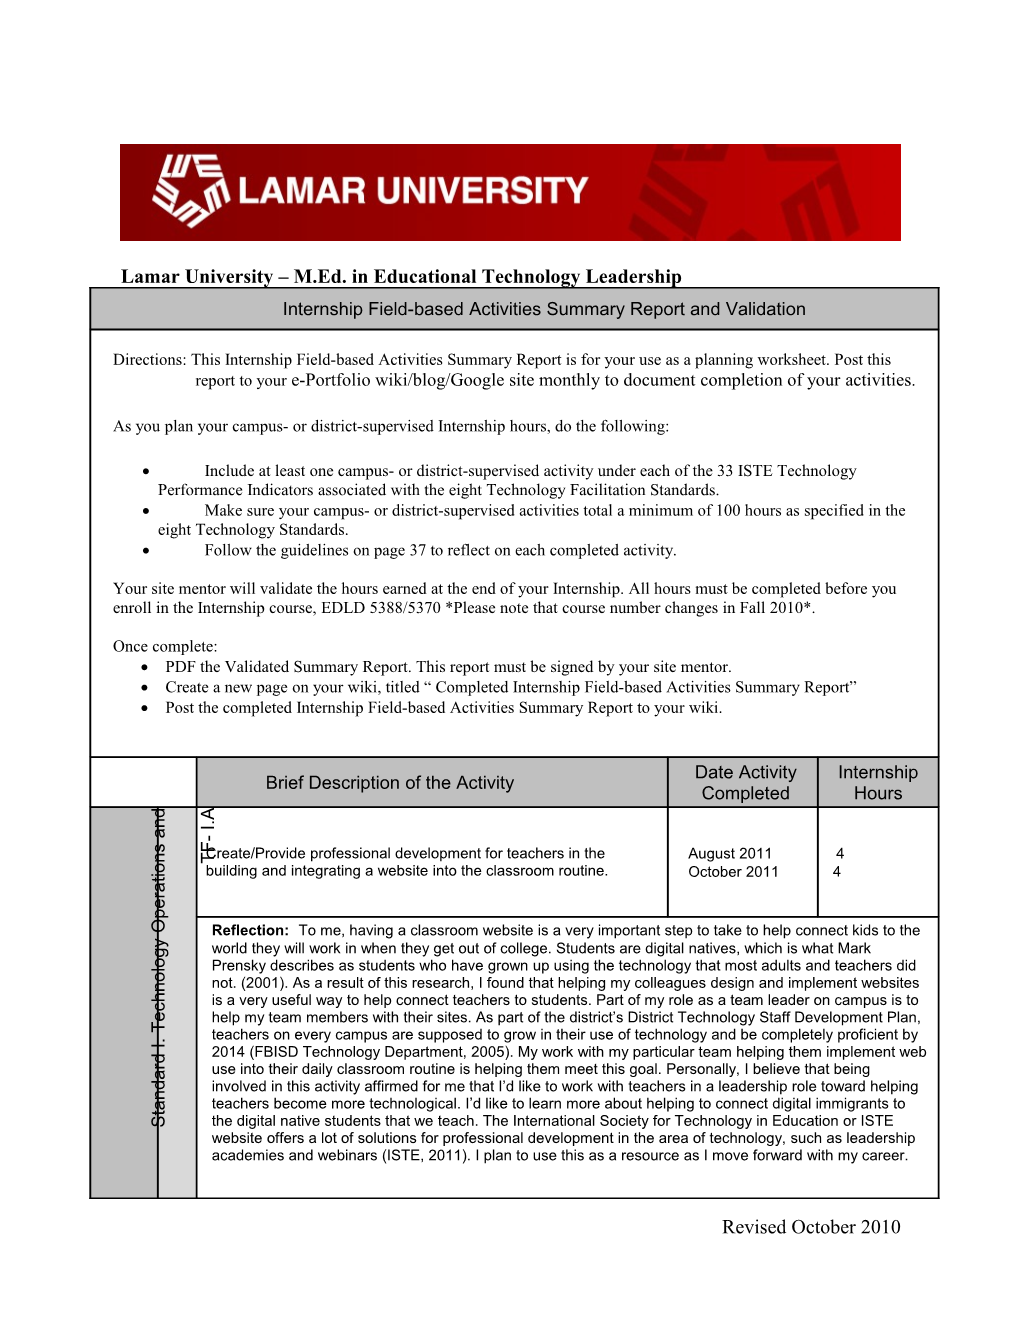 Lamar University M.Ed. in Educational Technology Leadership